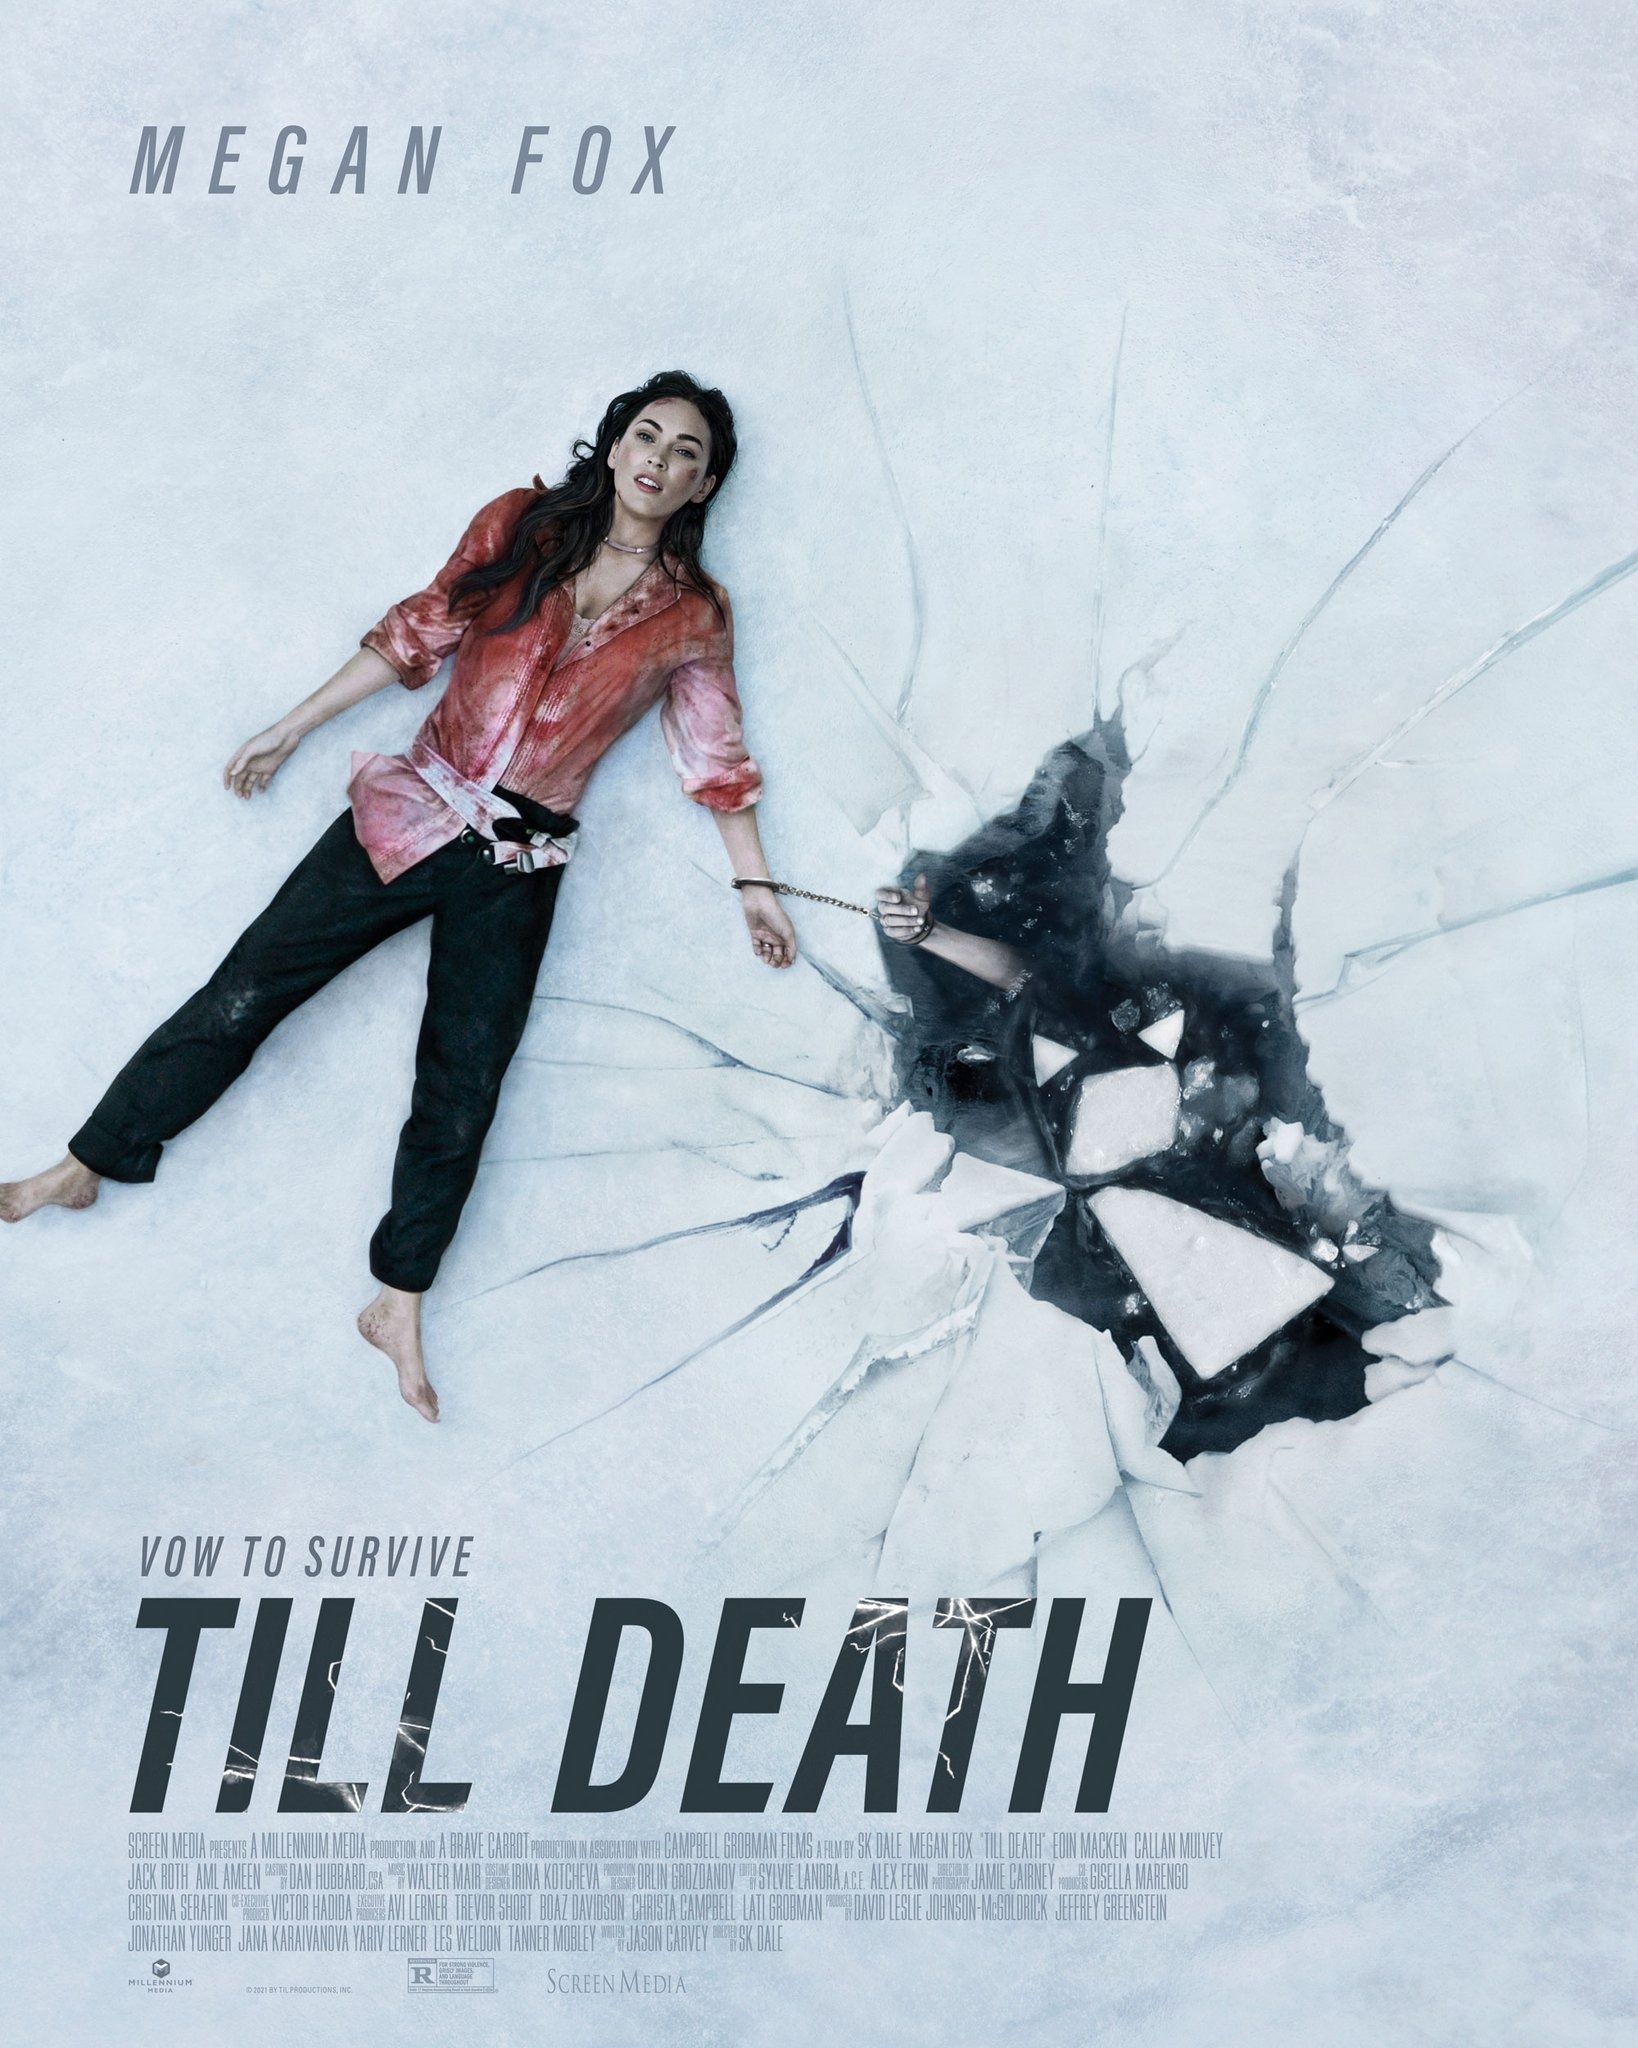 Mega Sized Movie Poster Image for Till Death 